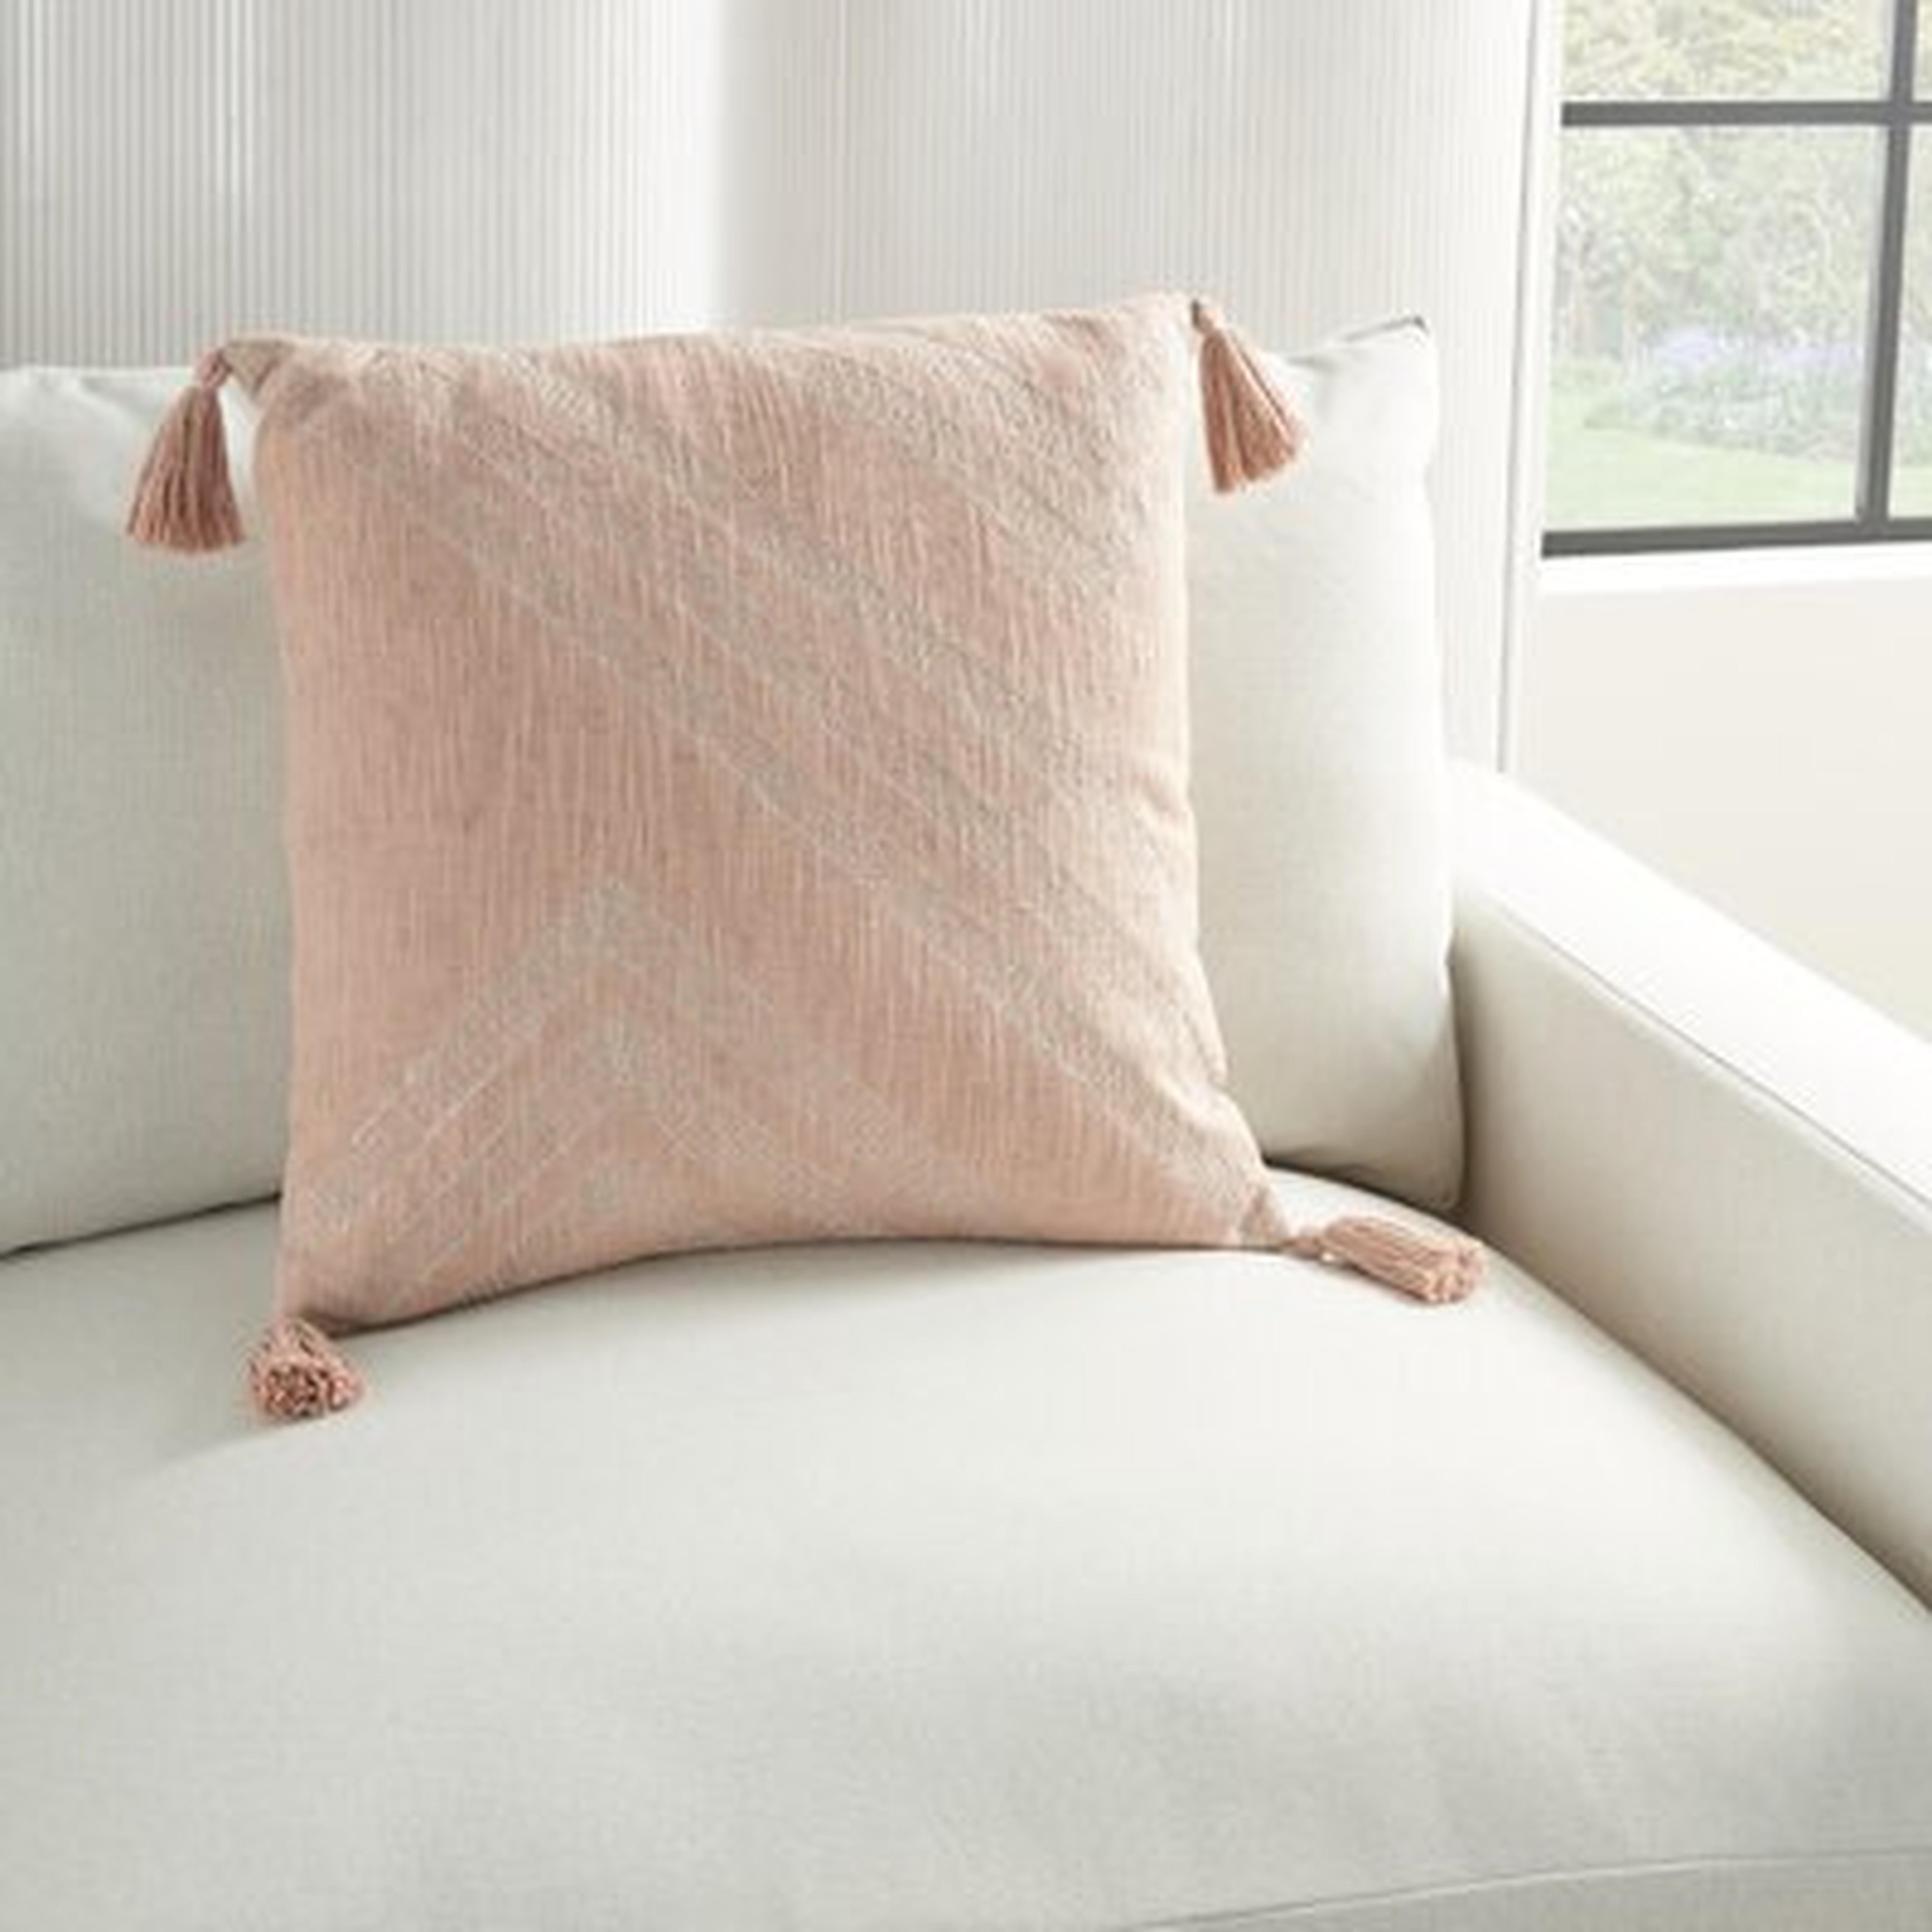 Kathy Ireland Square Cotton Pillow Cover & Insert - Wayfair